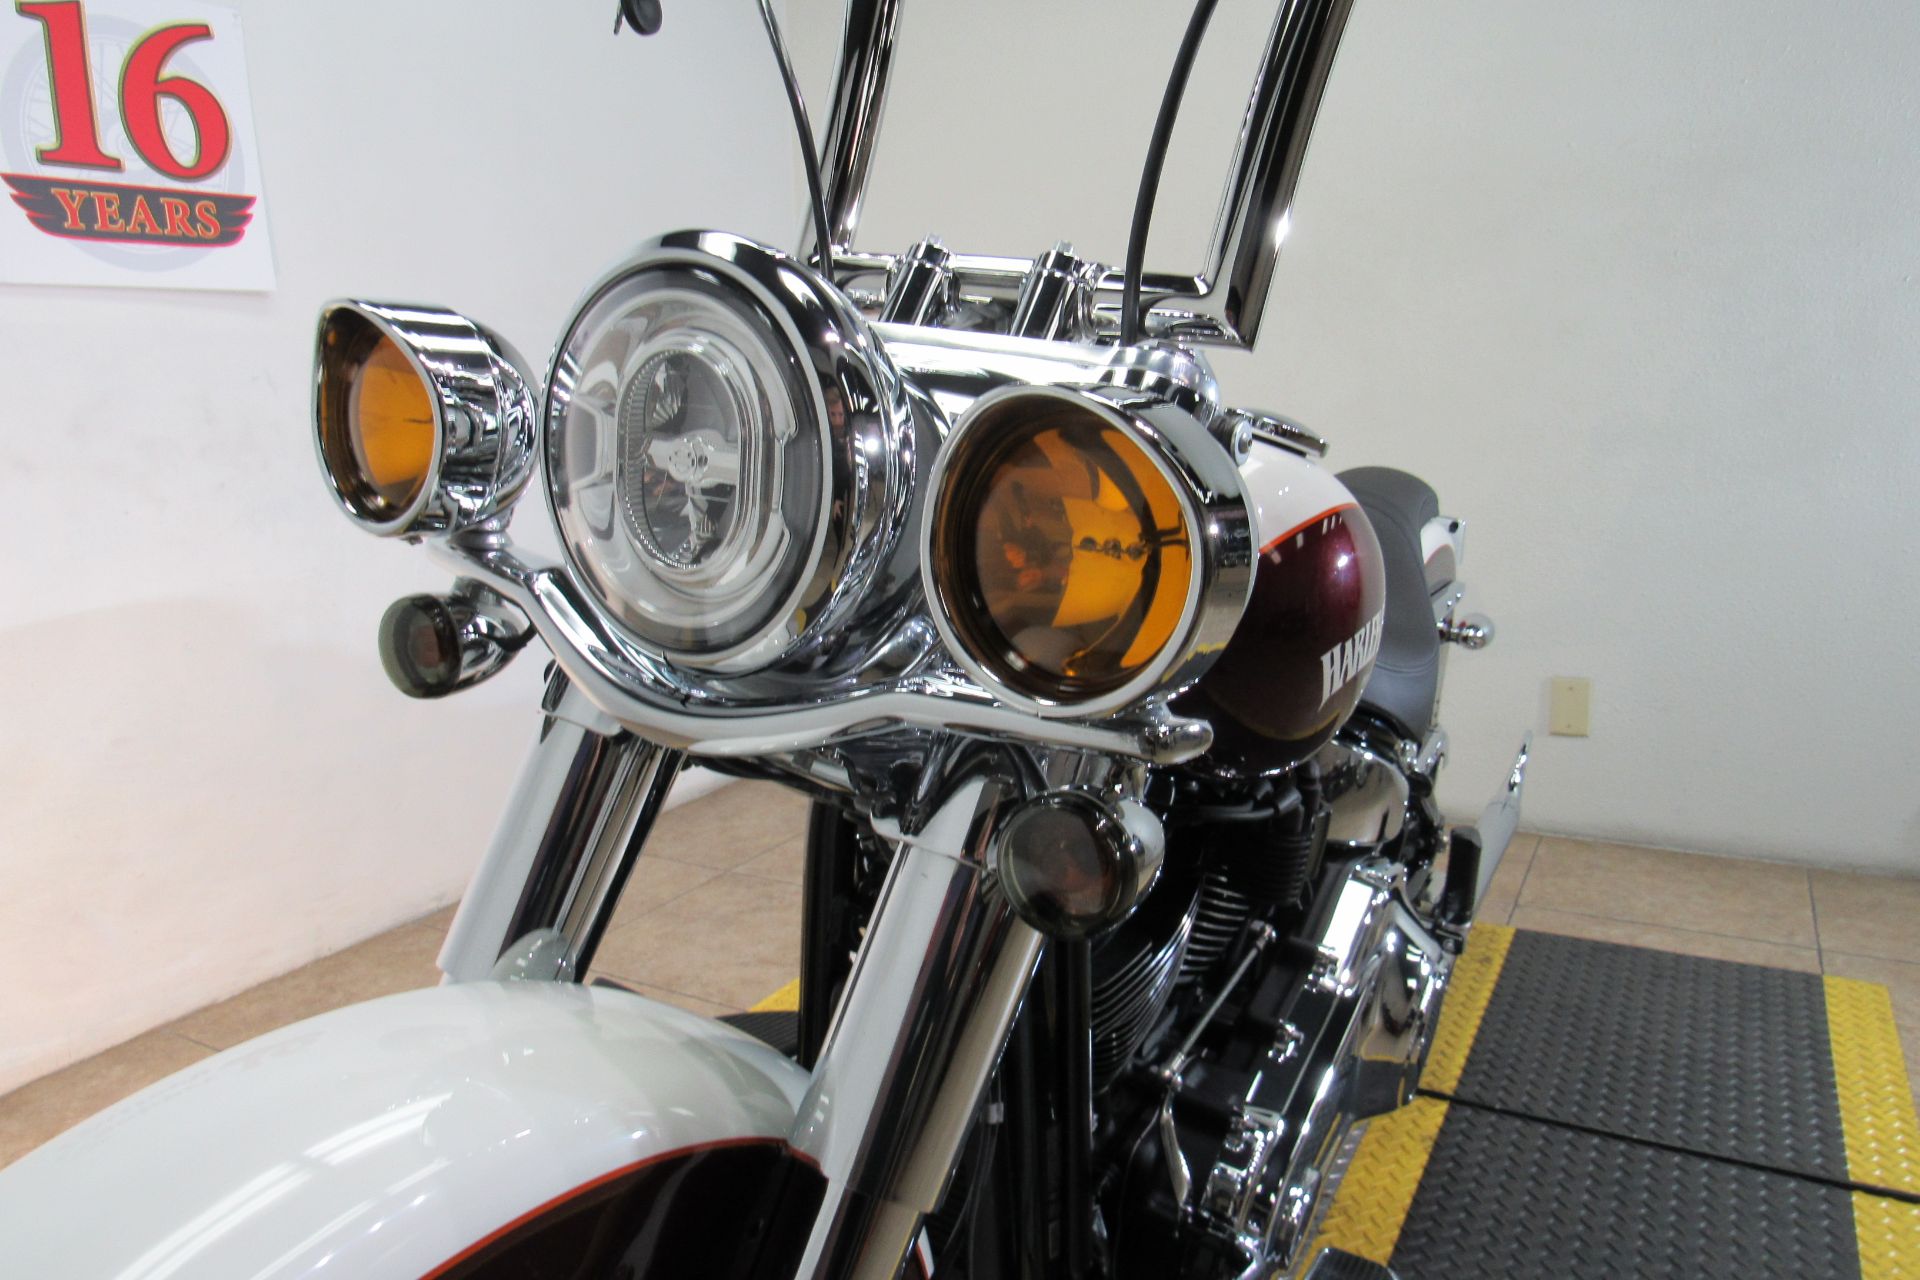 2020 Harley-Davidson Heritage Classic in Temecula, California - Photo 6